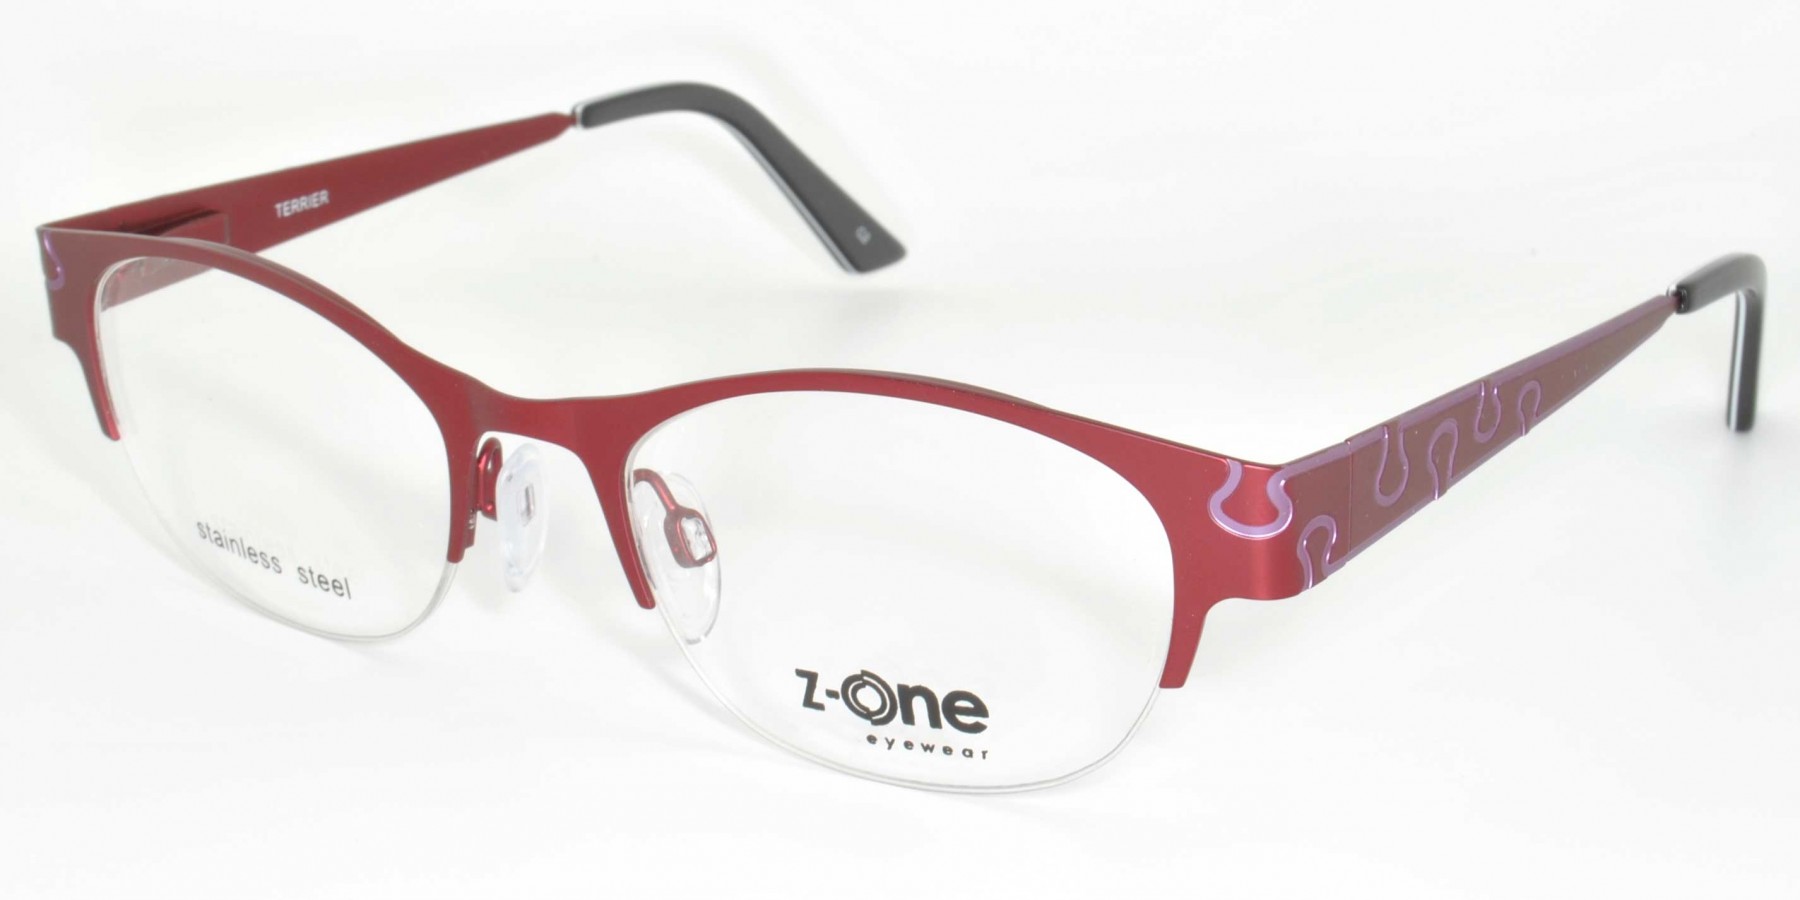 Z-One Terrier Prescription Glasses